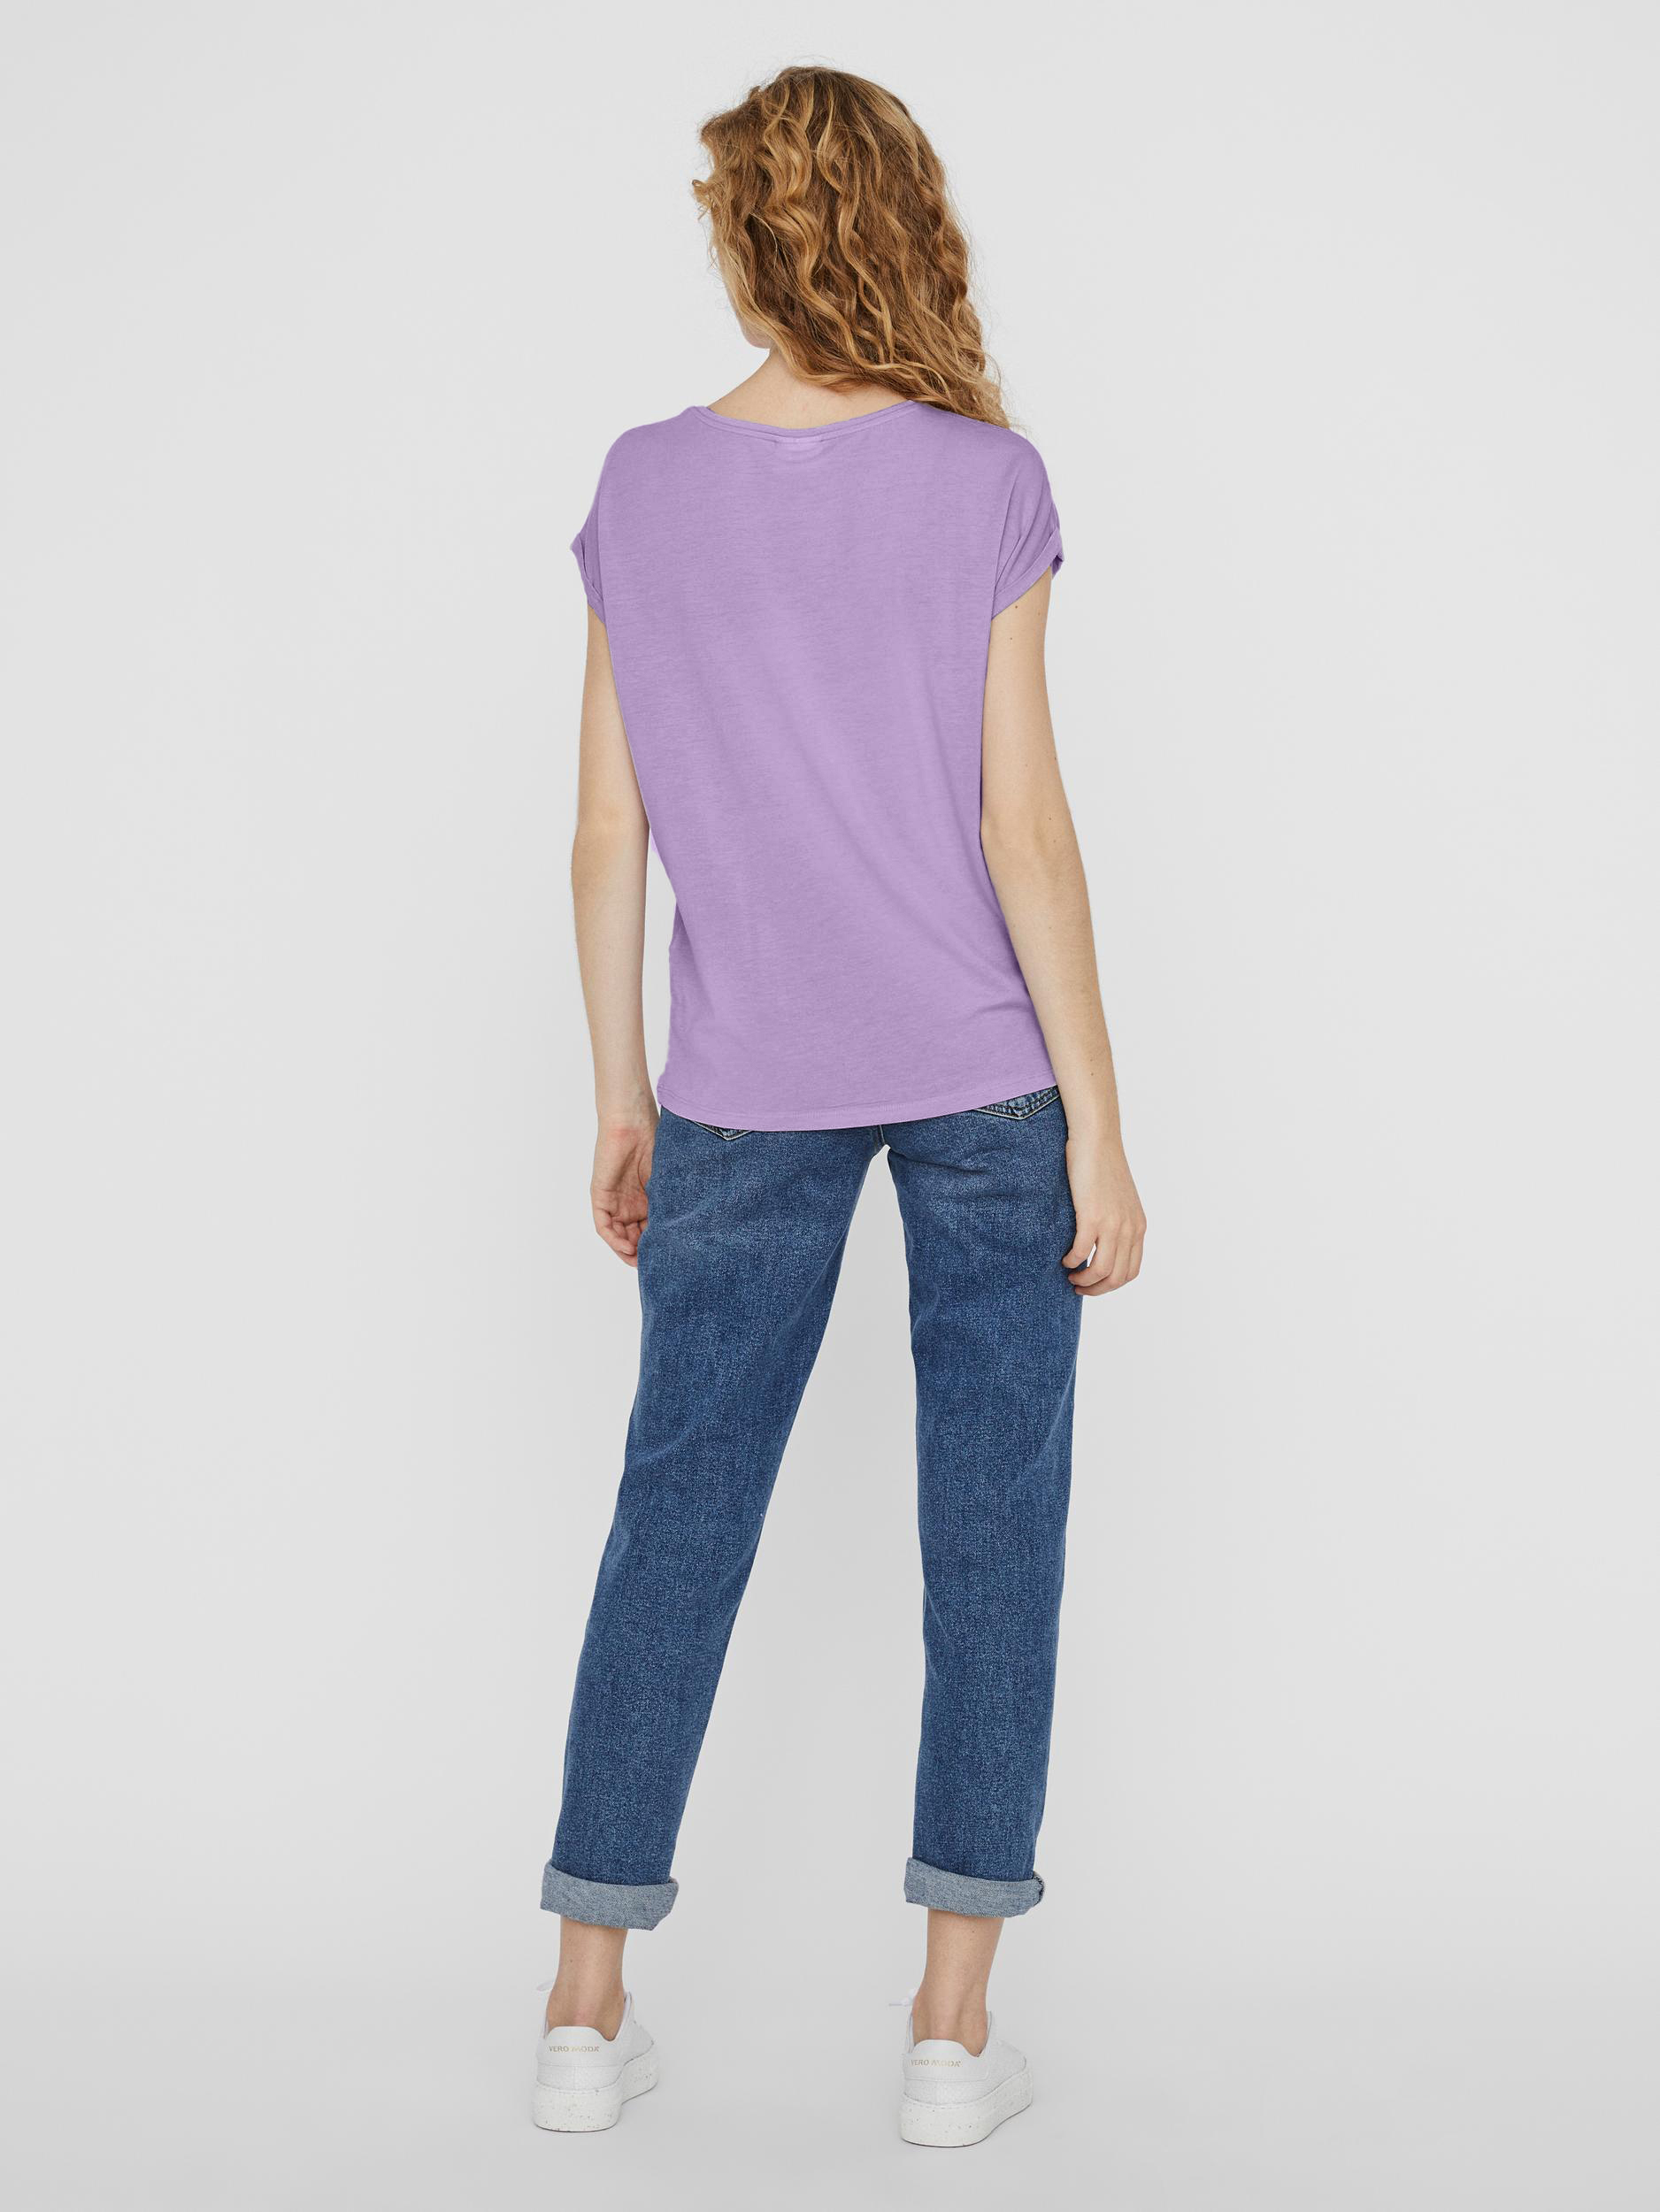 AWARE | Ava T-Shirt, CONCORD GRAPE, large